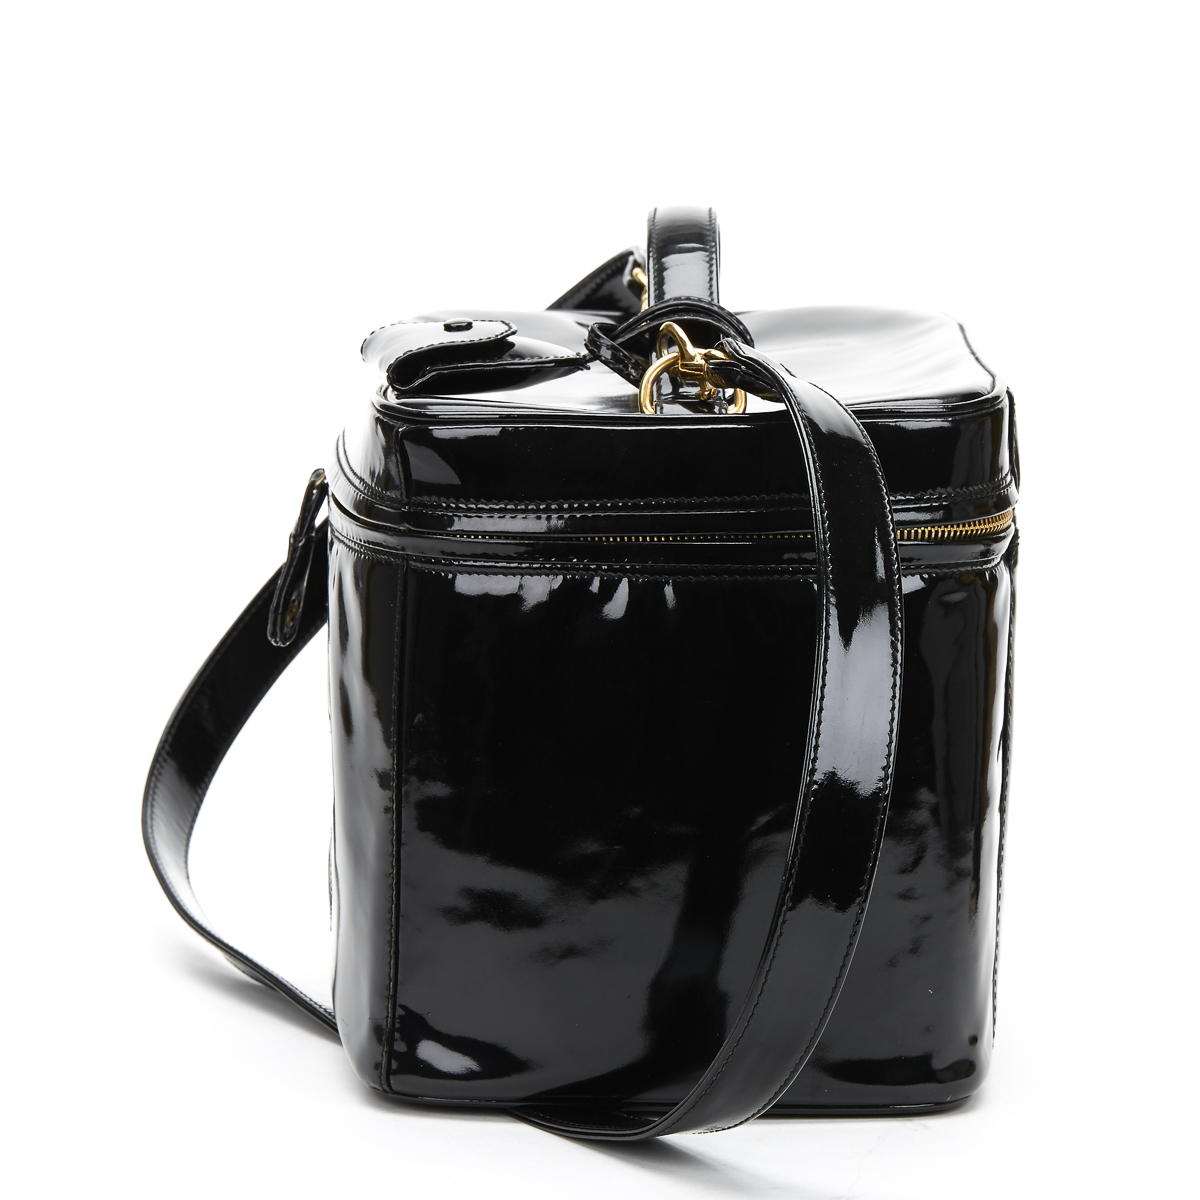 Chanel Black Patent Leather Vintage Vanity Bag - Image 3 of 9